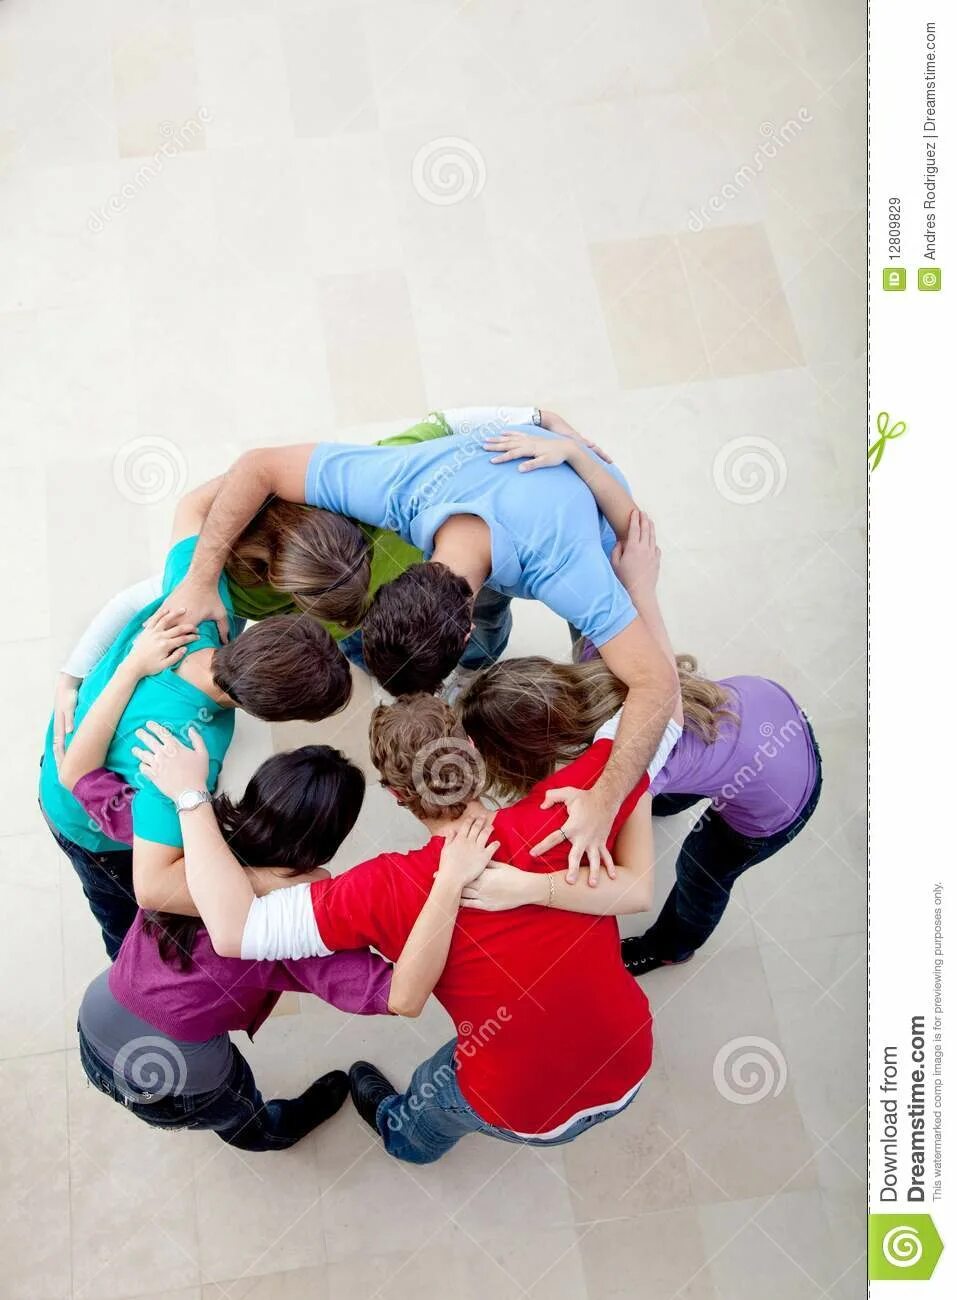 Команда обними. Люди в кругу обнимаясь. Люди в кругу обнимаются. Обнимаю коллектив. Круг объятий.